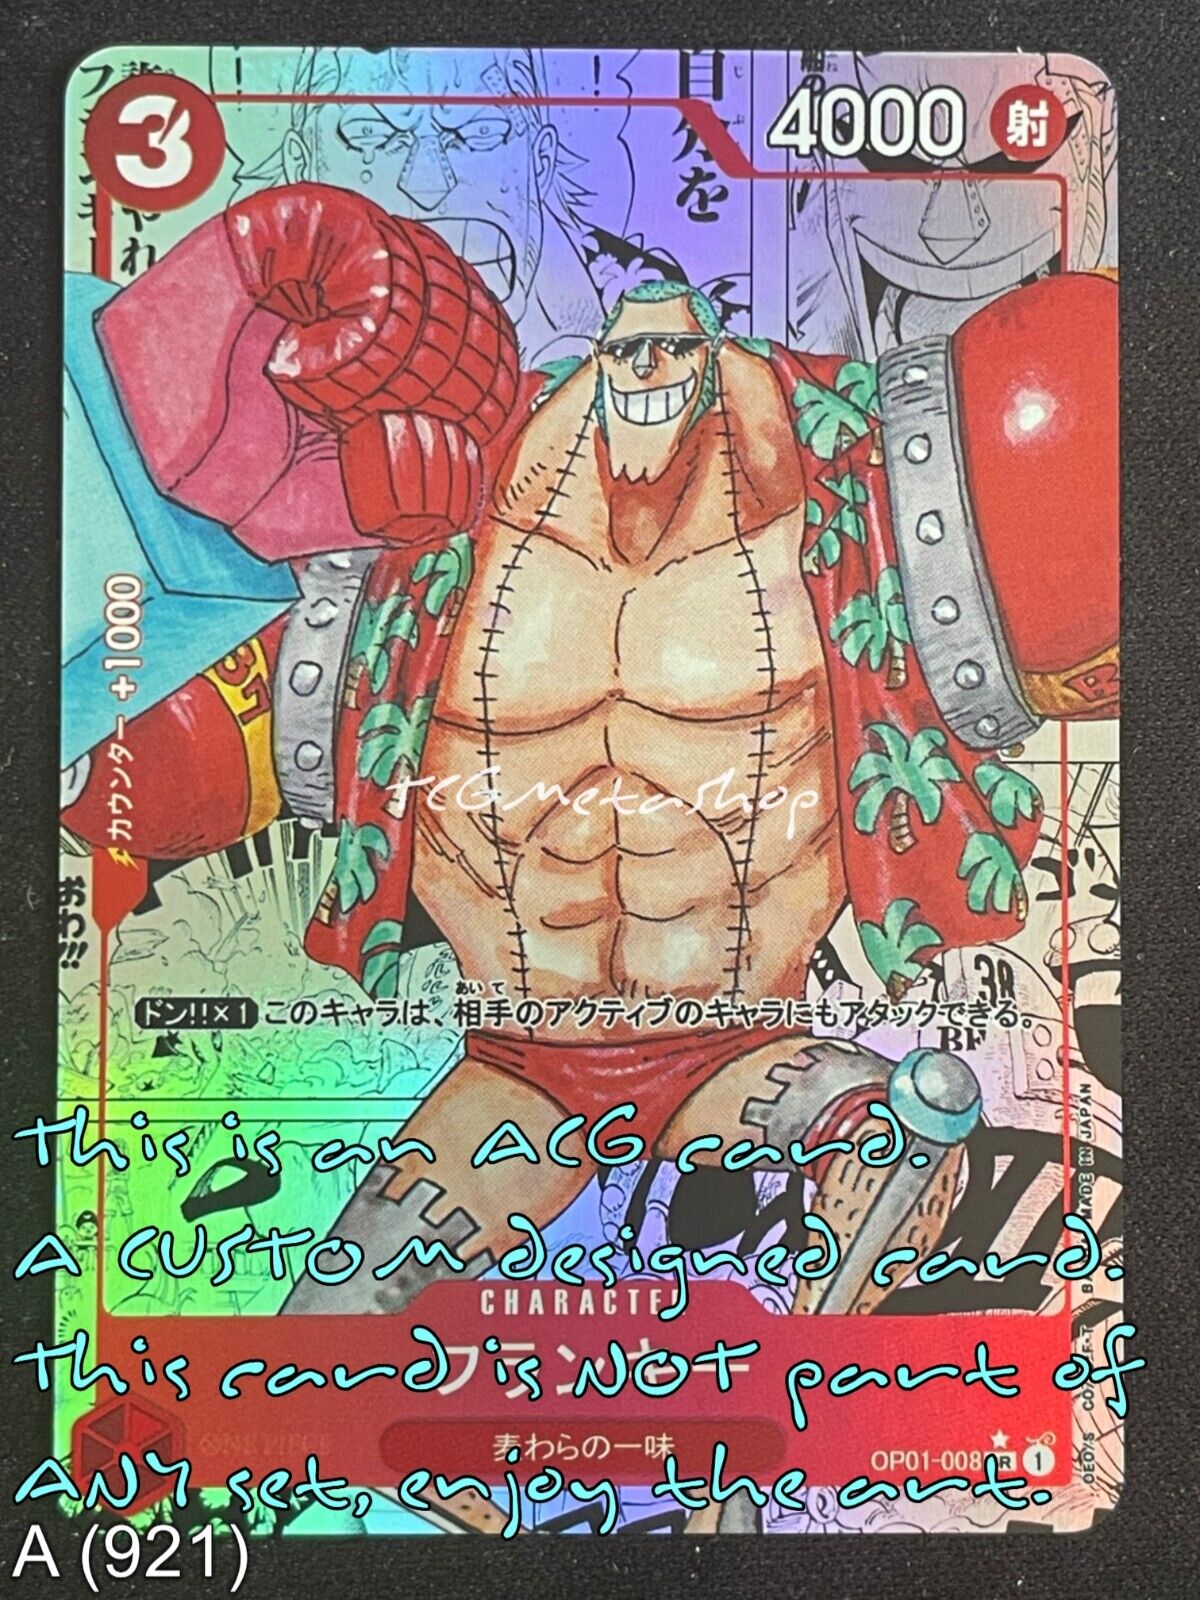 🔥 A 921 Franky One Piece Goddess Story Anime Waifu Card ACG 🔥